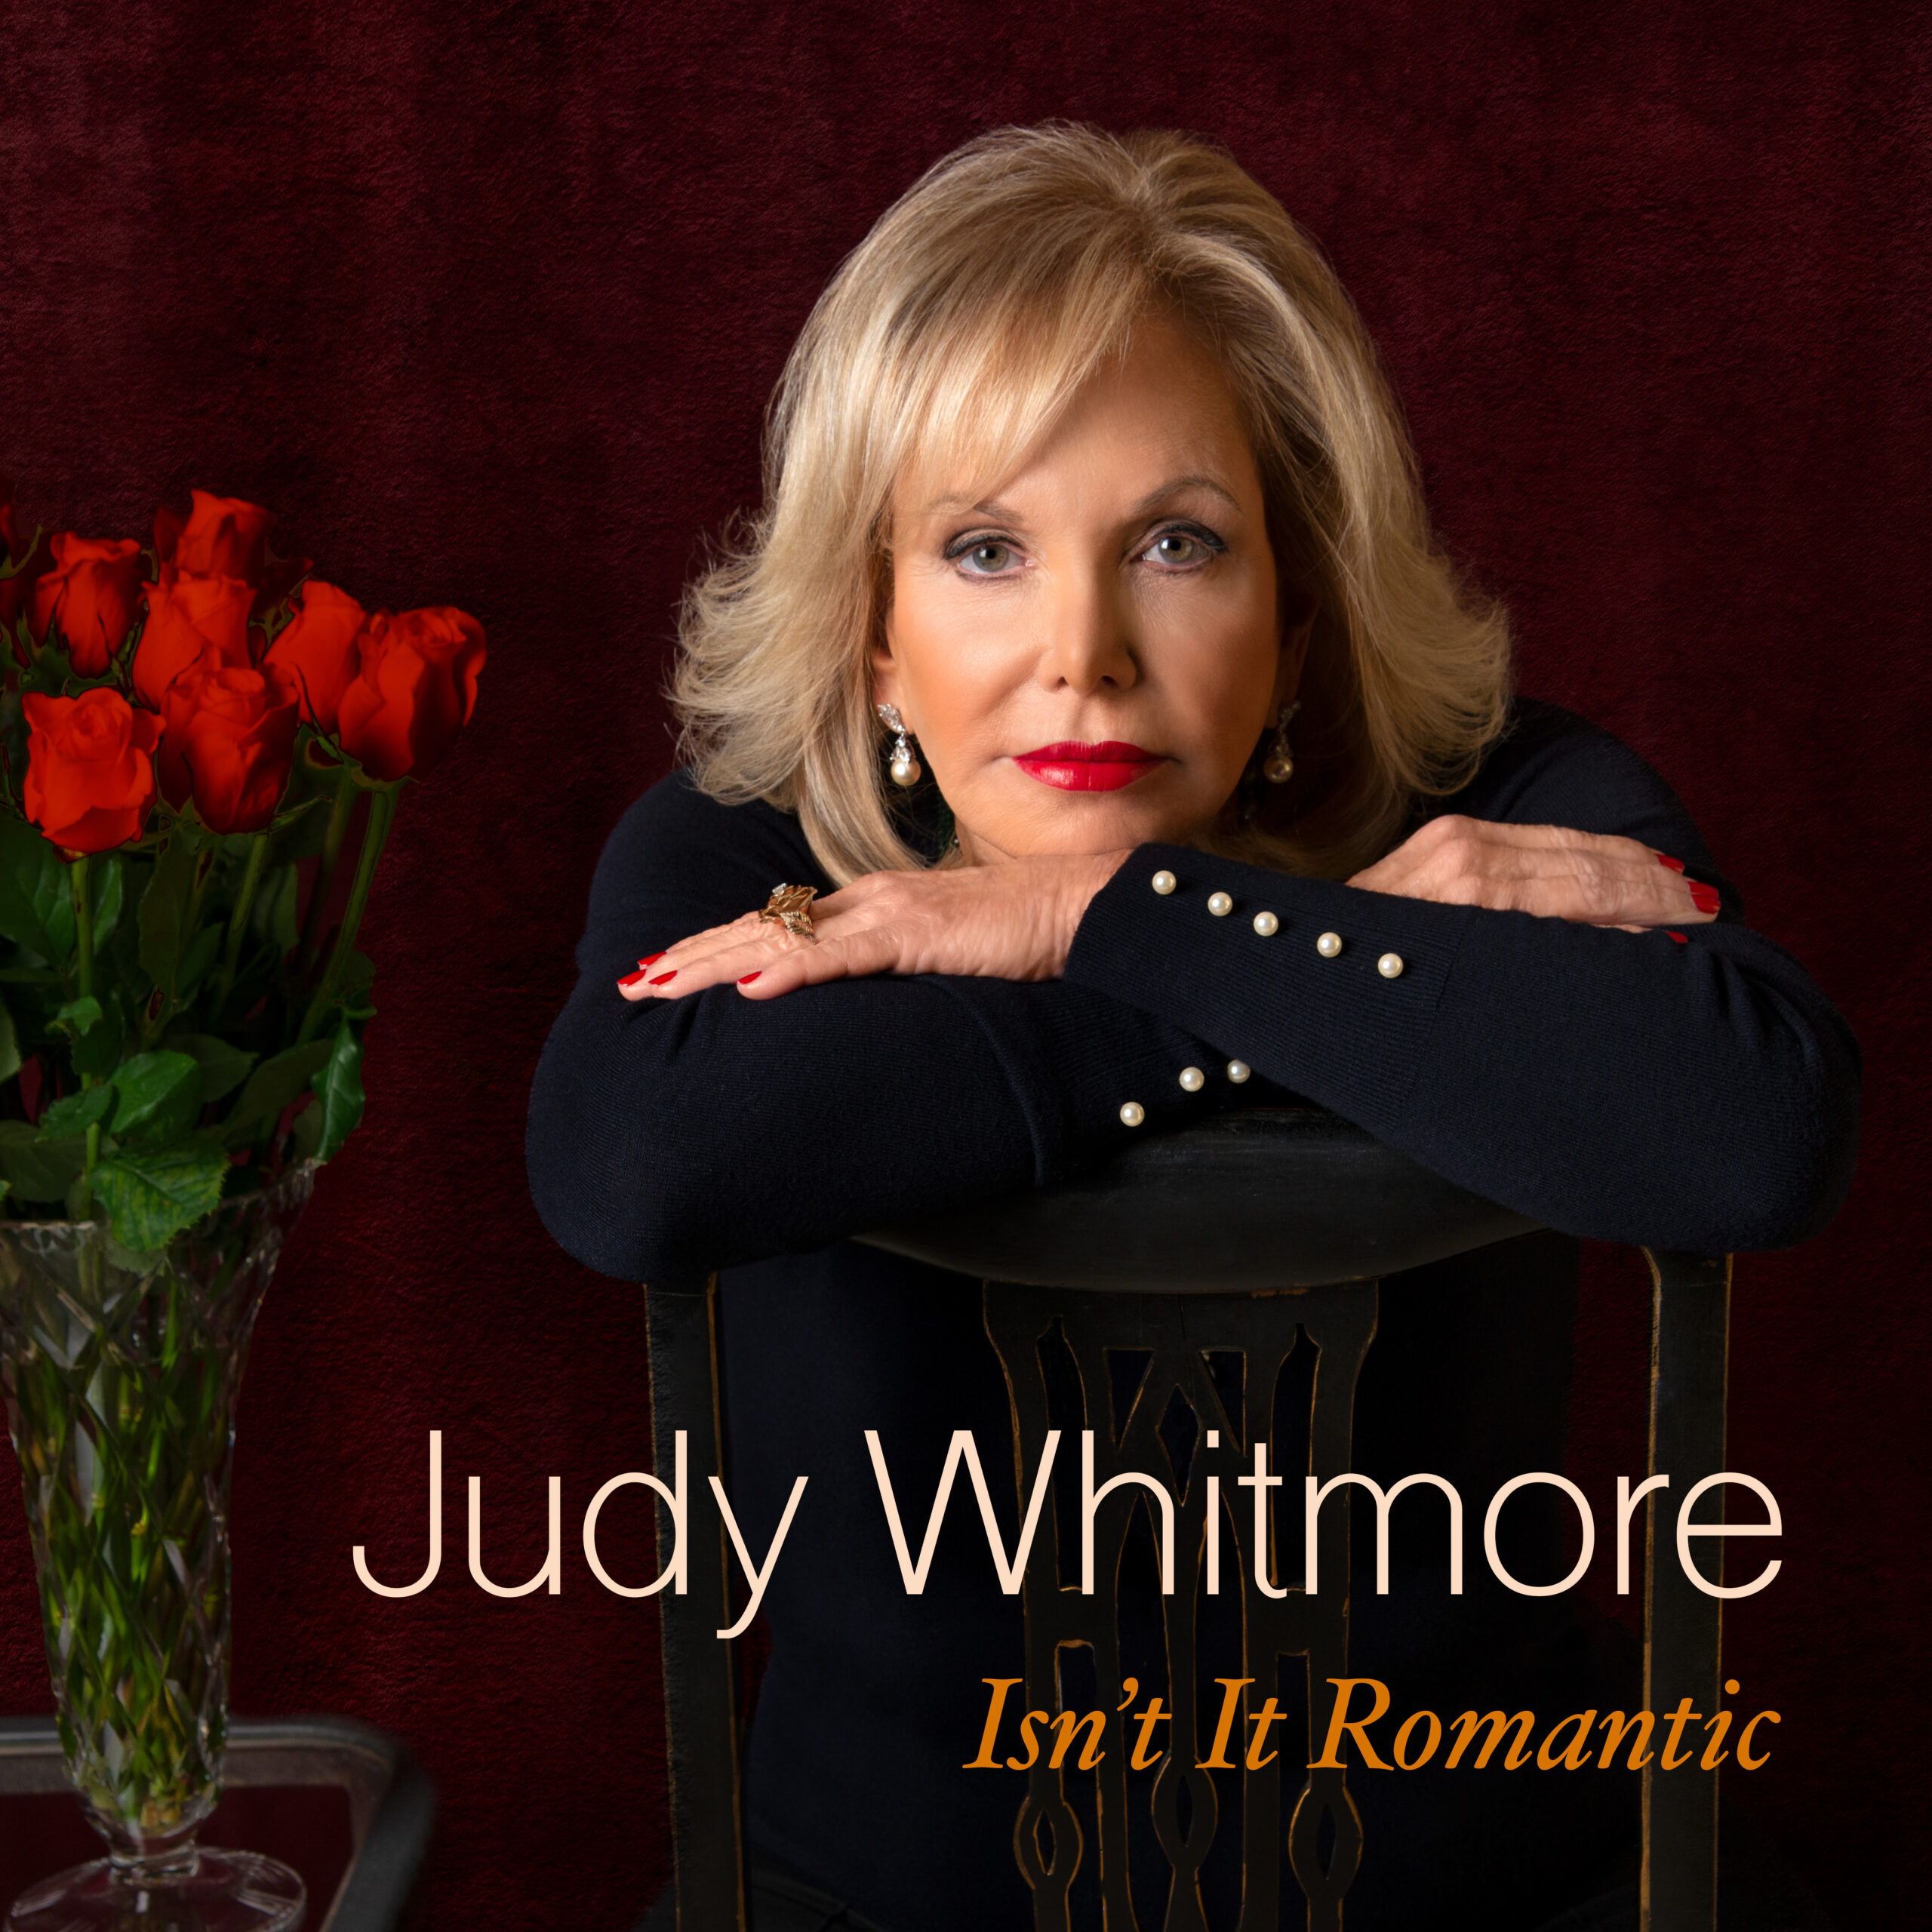 Judy Whitmore’s “Isn’t It Romantic” Released